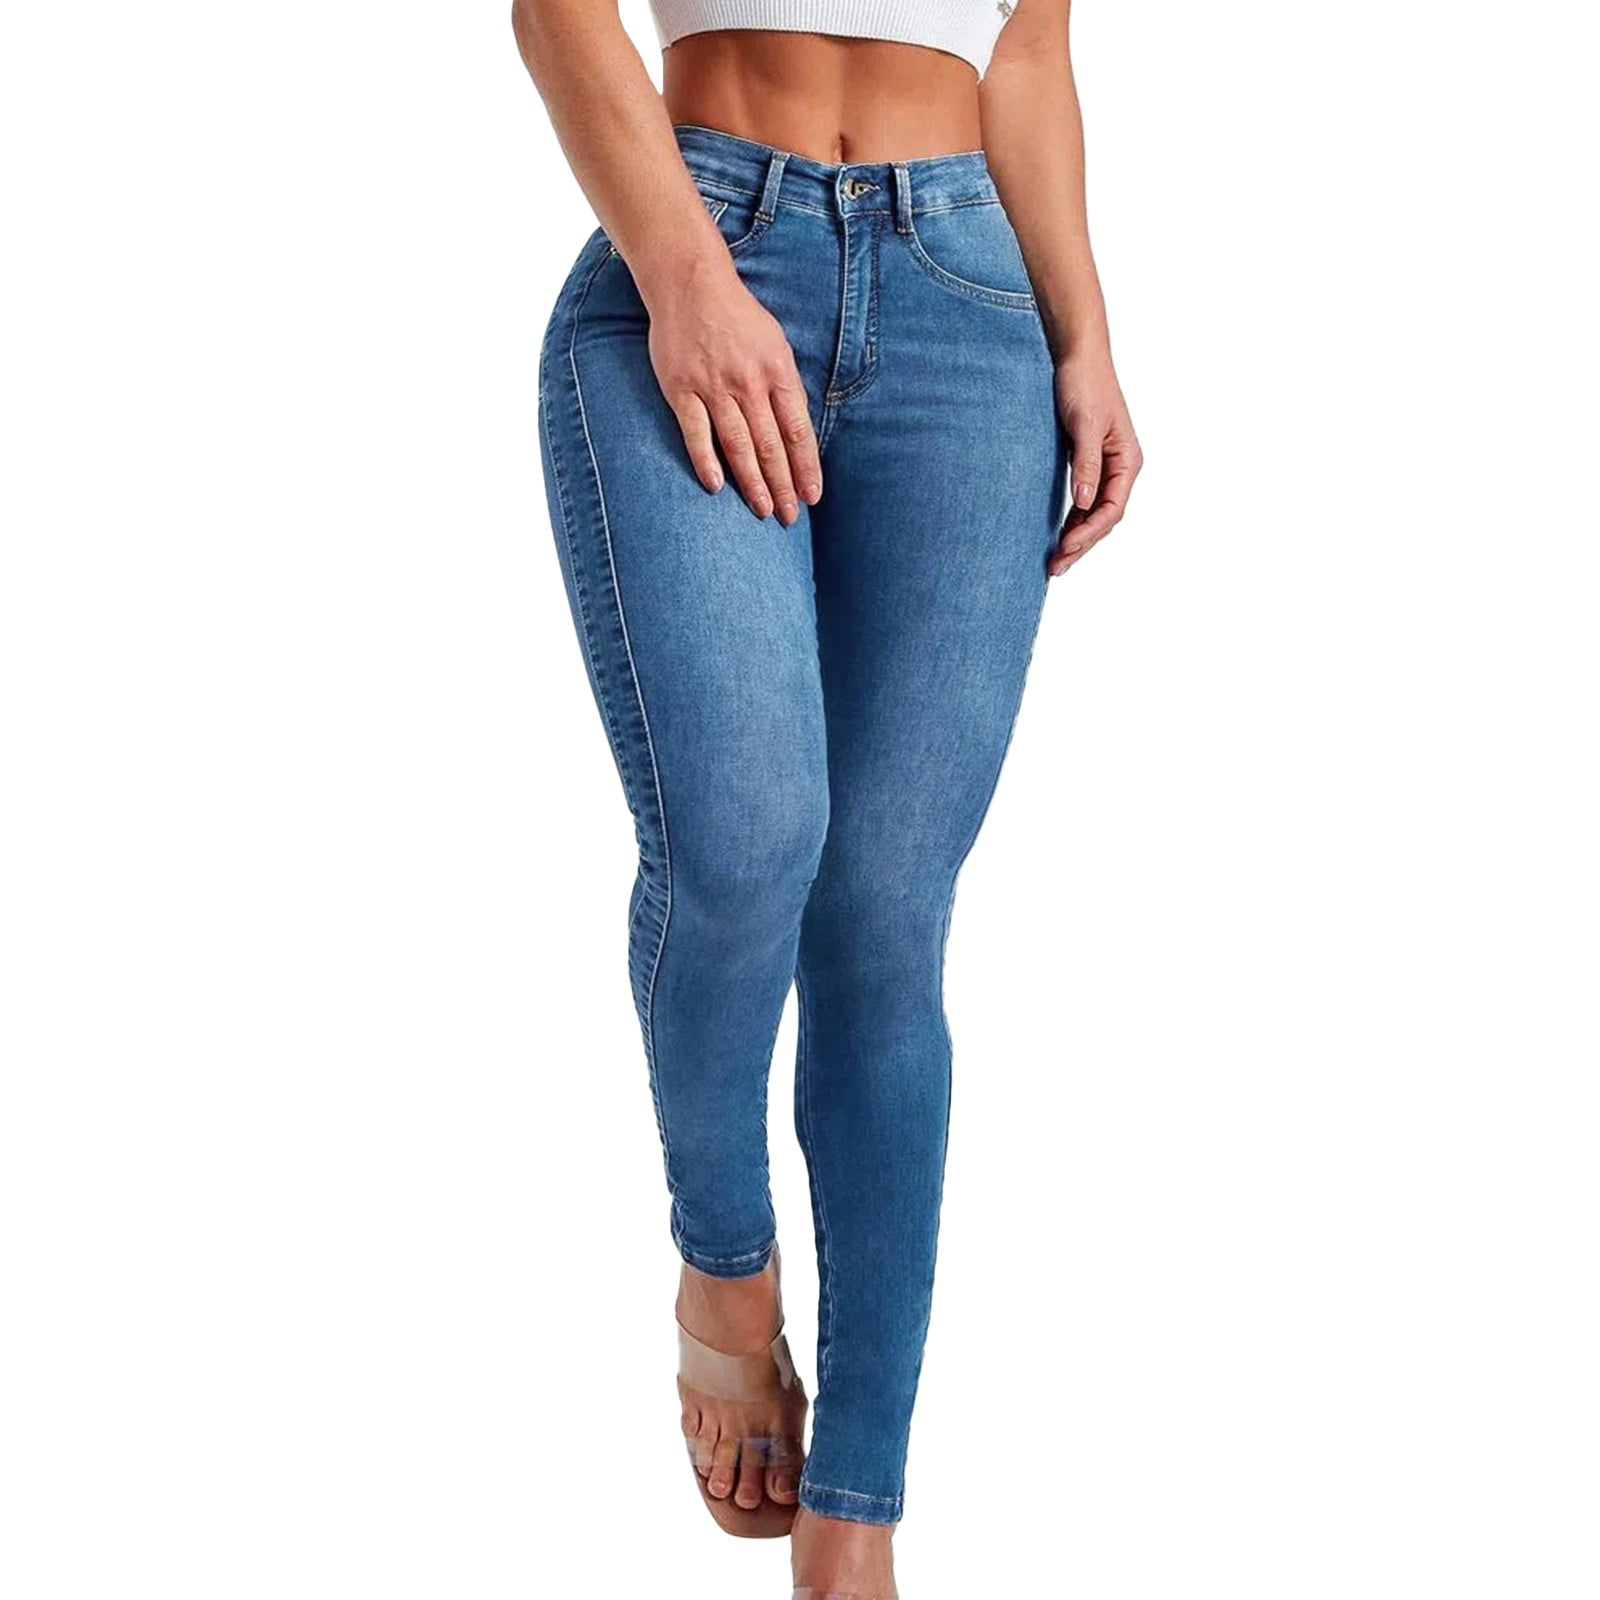 Jean Pants Women High Waist 12 Womens Autumn And Winter Slim Shape Small Leg Jeans Jean Pants for plus Size Women -